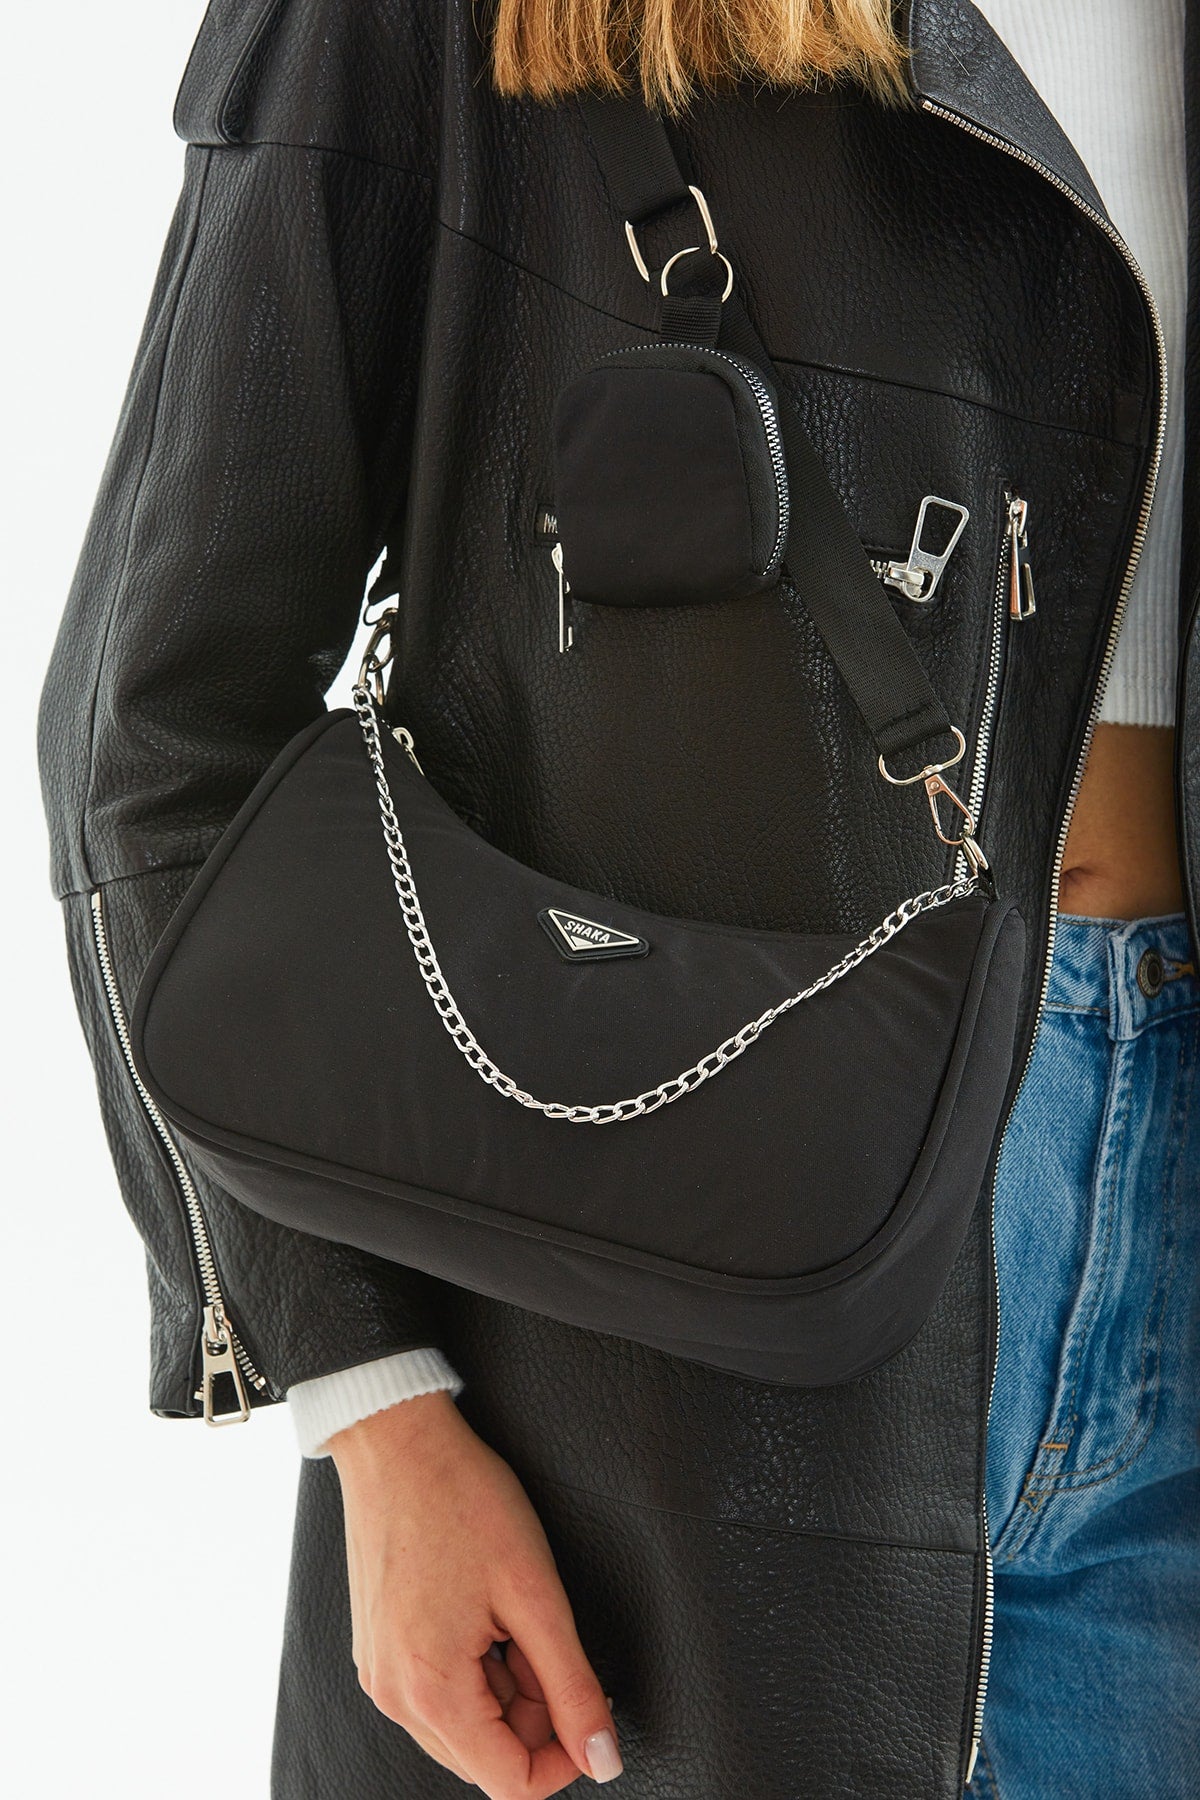 Women's Cross Shoulder Bag with Black U6 Chain Strap Detailed And Adjustable Strap Wallet B:12 E:27 G: